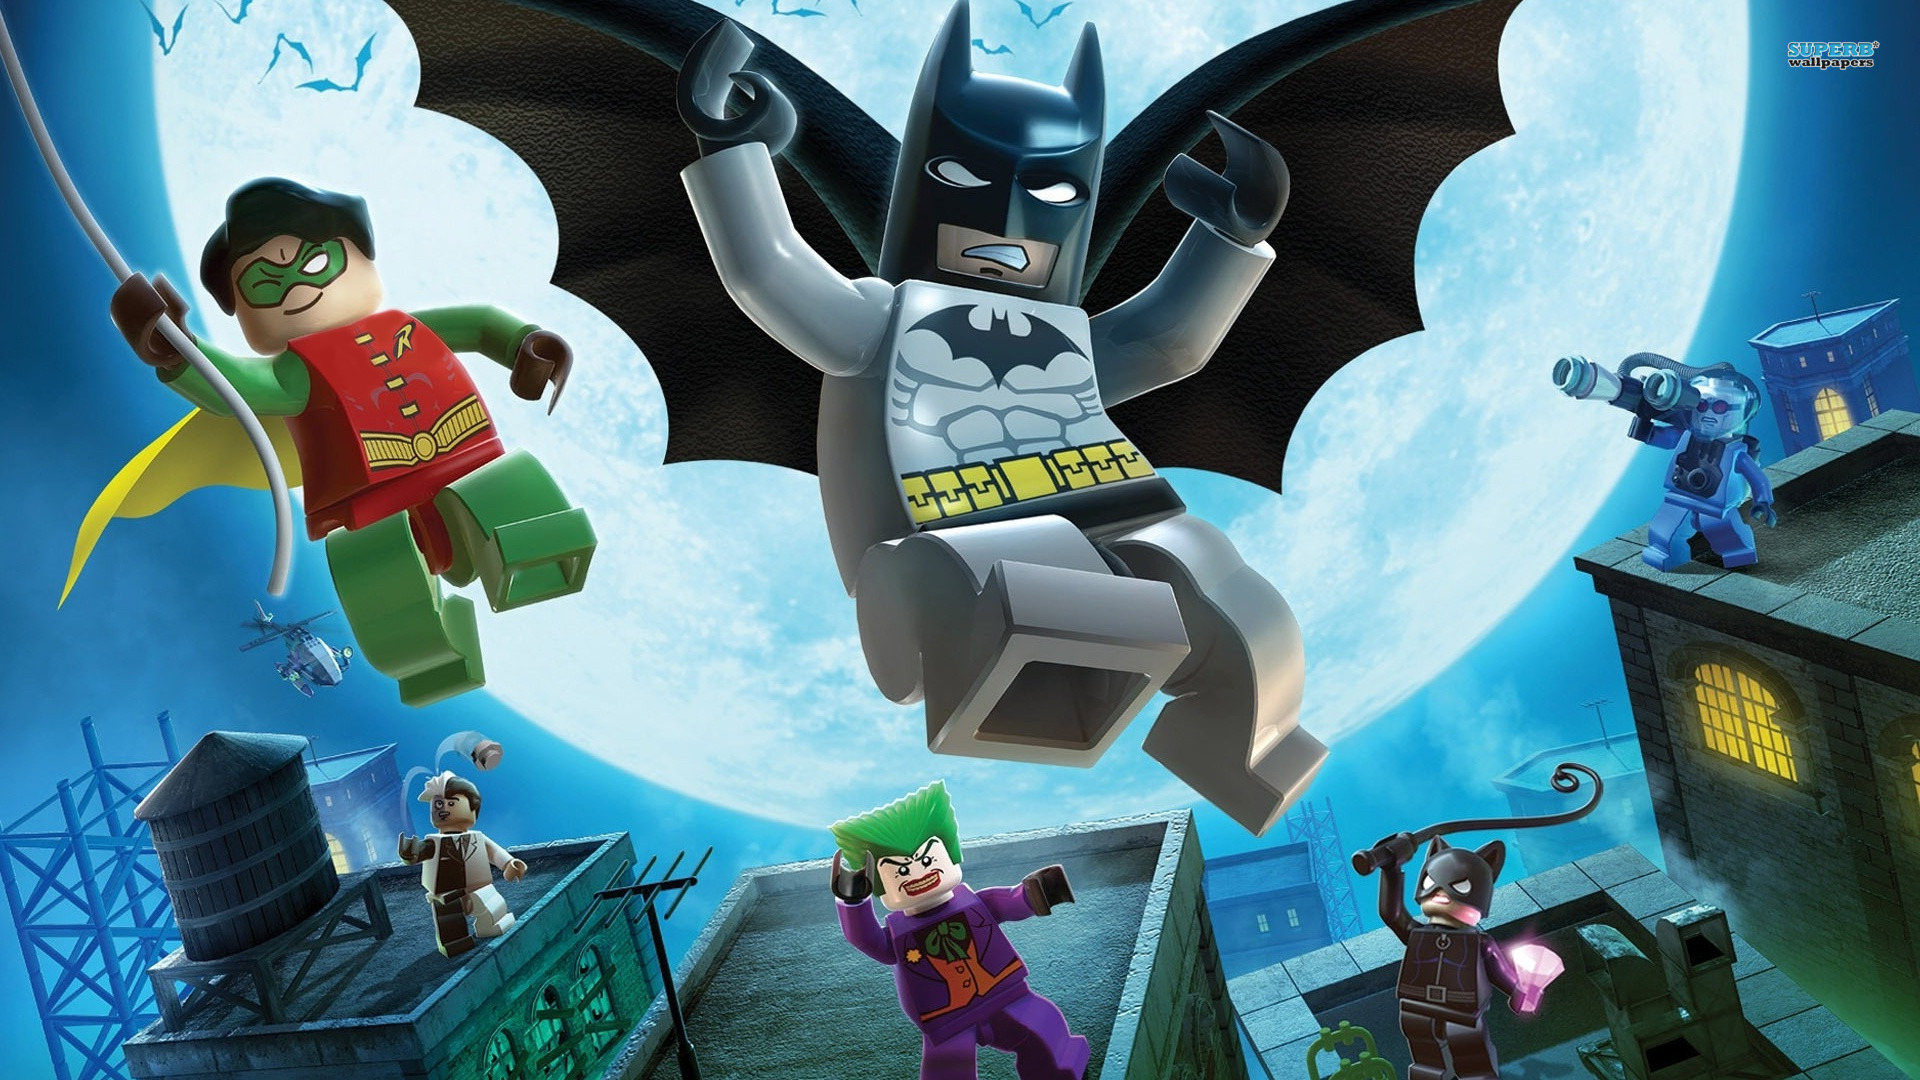 Lego Batman 2 DC Super Heroes Cd Key Giveaway!|Allkeyshop.com and HumbleBazooka.com - Humble Bazooka